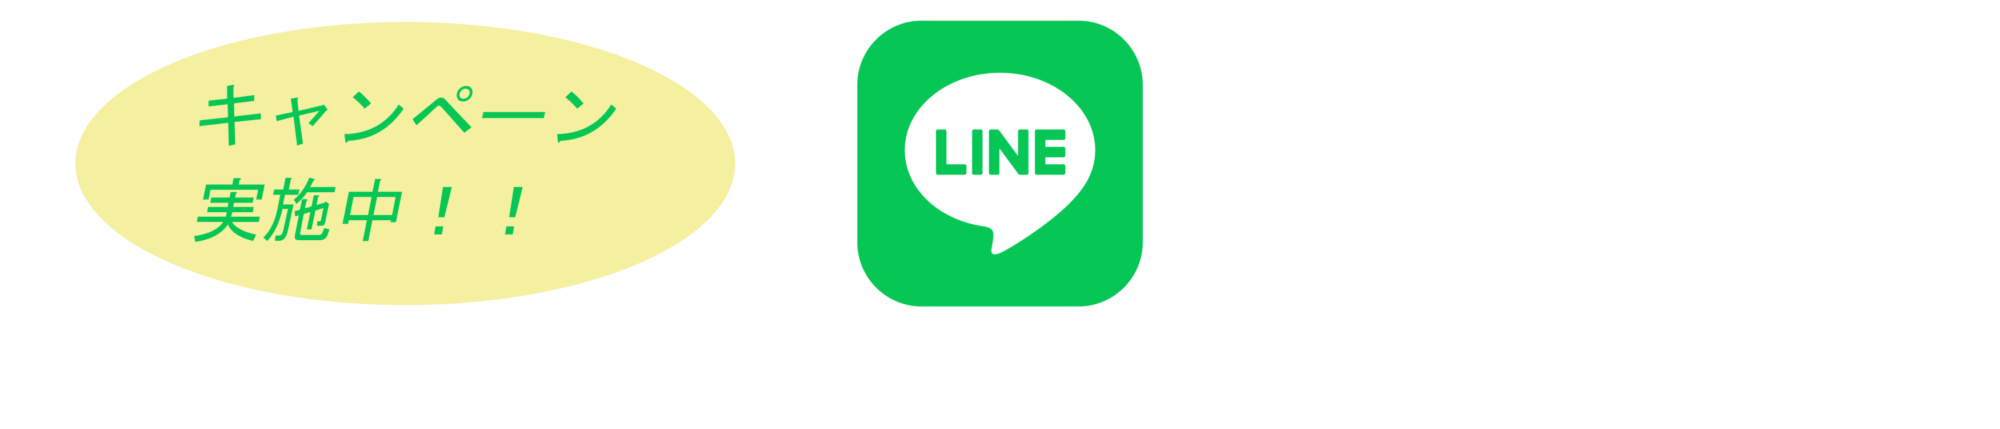 LINE-BN04